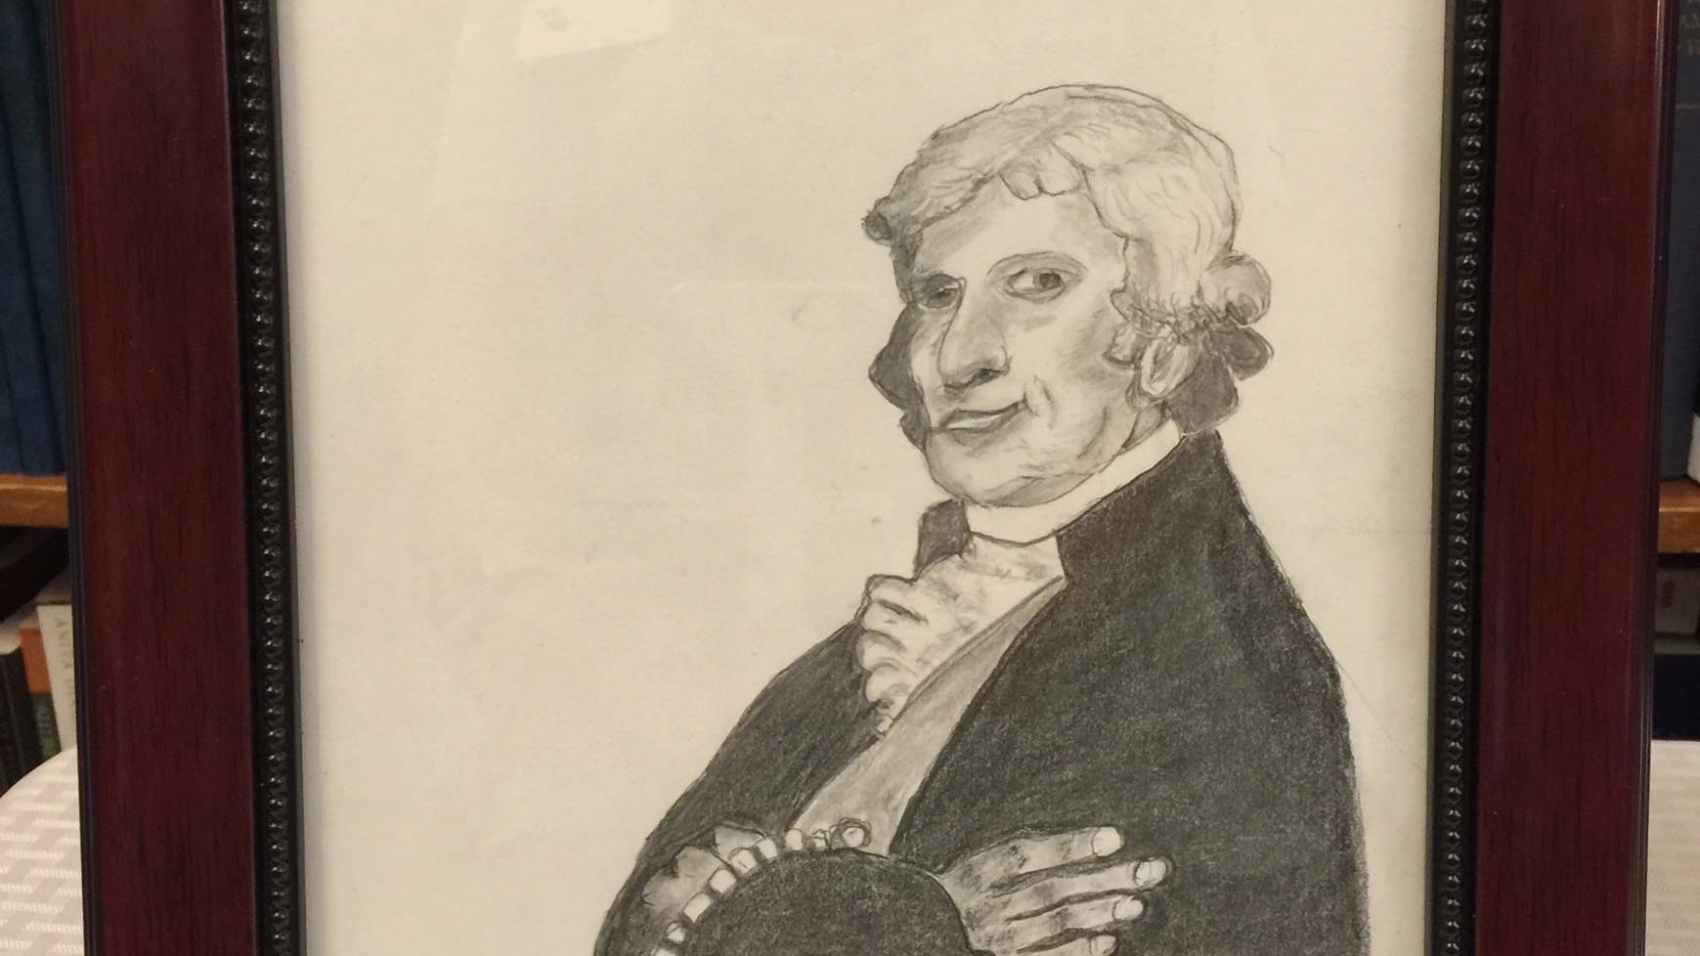 Robert Enders, drawing, "Thomas Jefferson," was a winner.